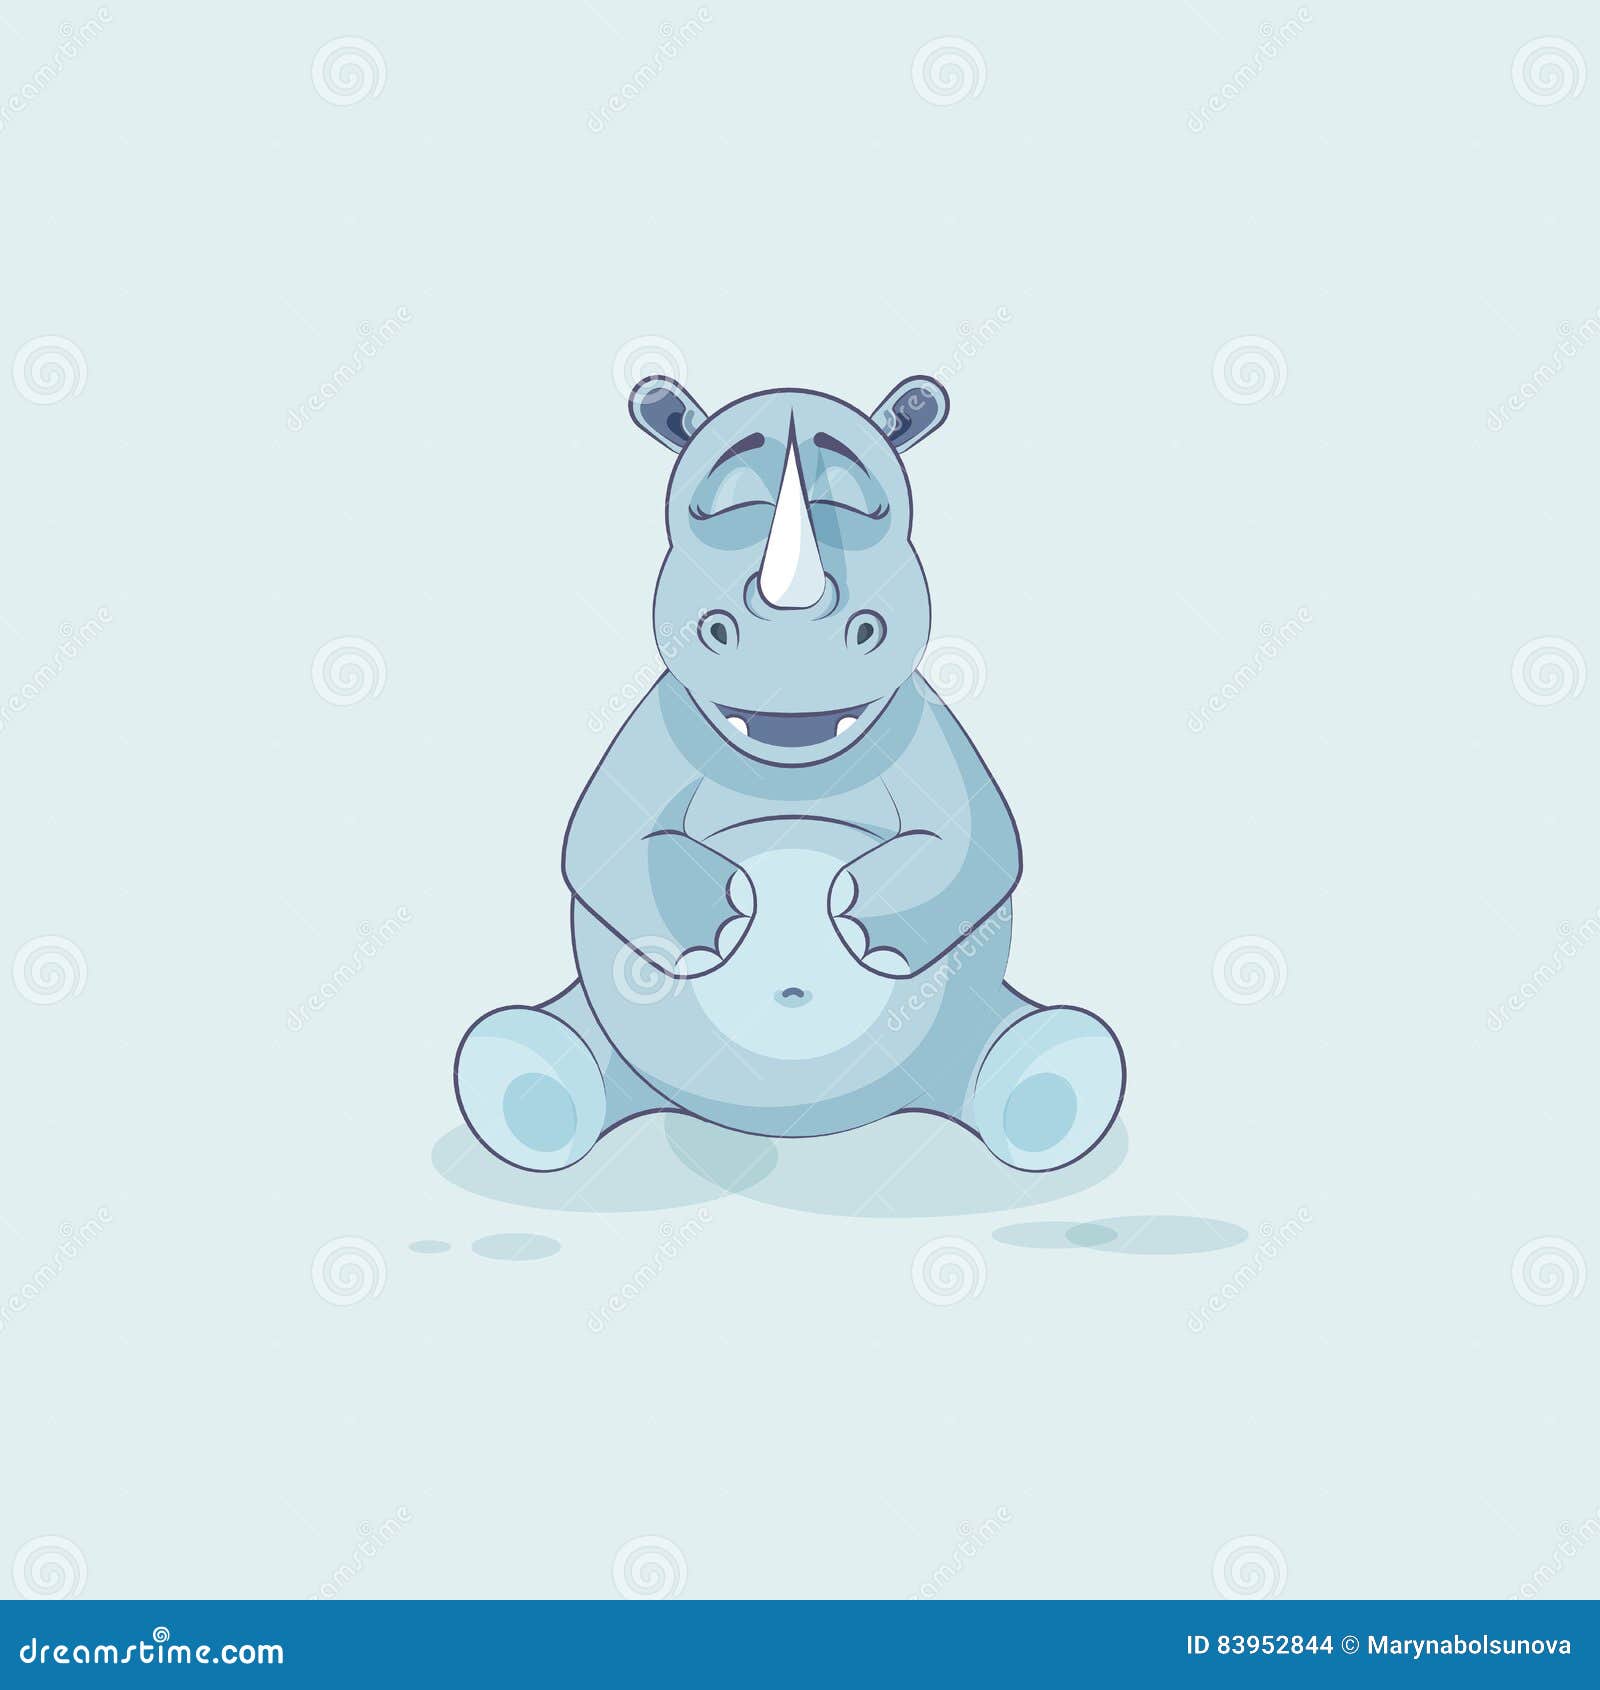 Illustration Emoji Character Cartoon Rhinoceros Happy and Contented Rhino  Sticker Emoticon Stock Vector - Illustration of rhinoceros, rhino: 83952844